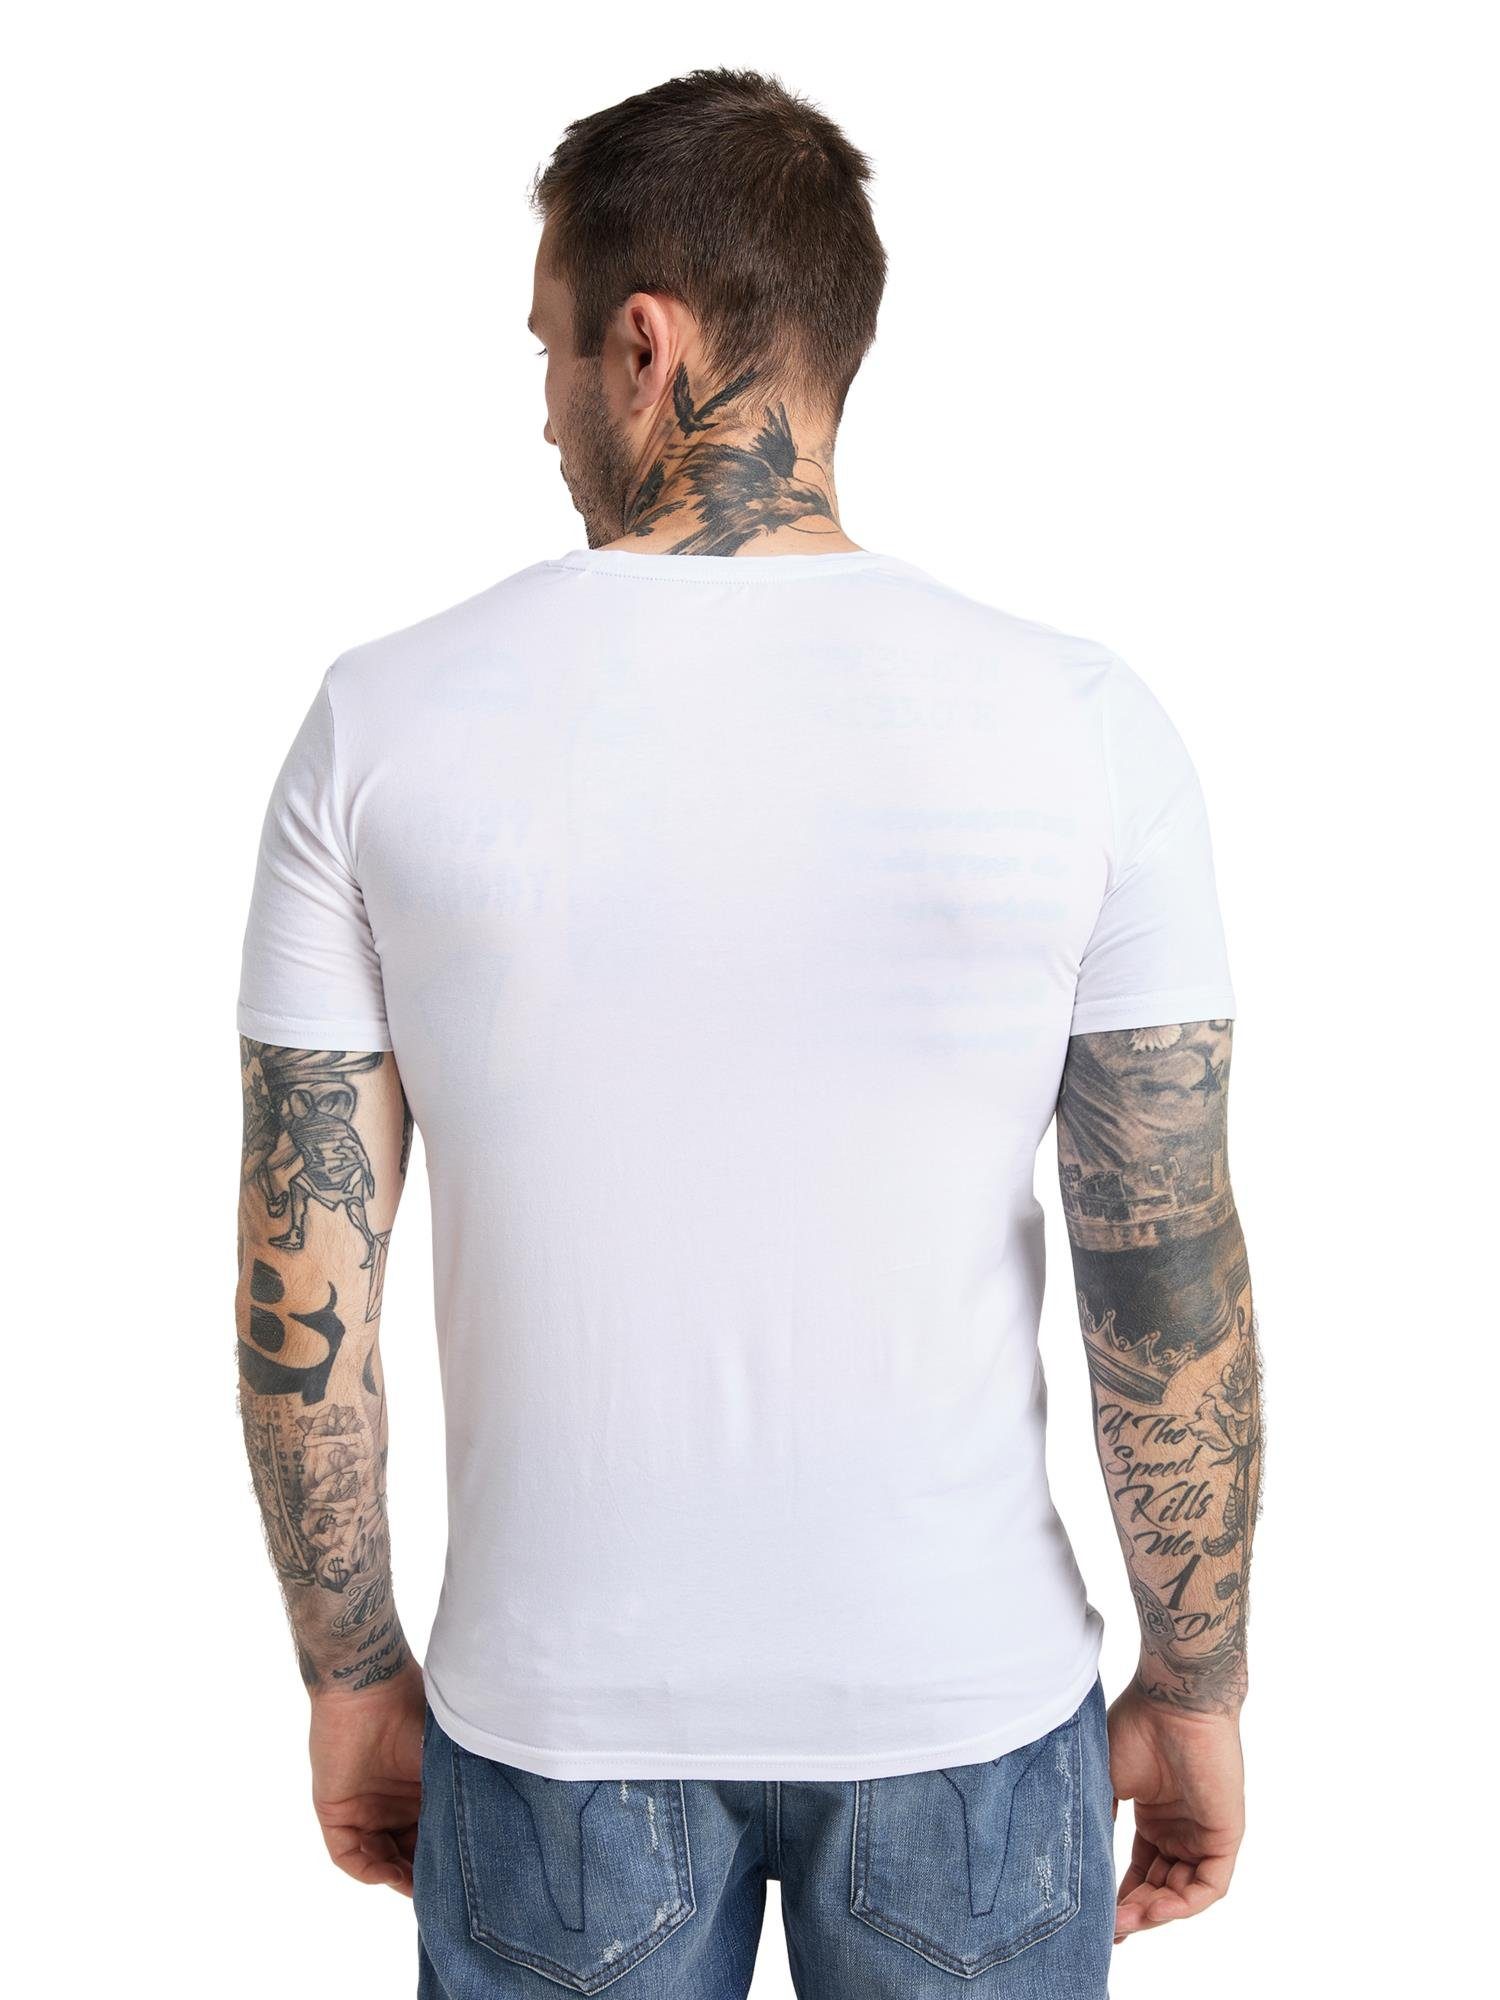 Cavallari T-Shirt CARLO Weiß COLUCCI